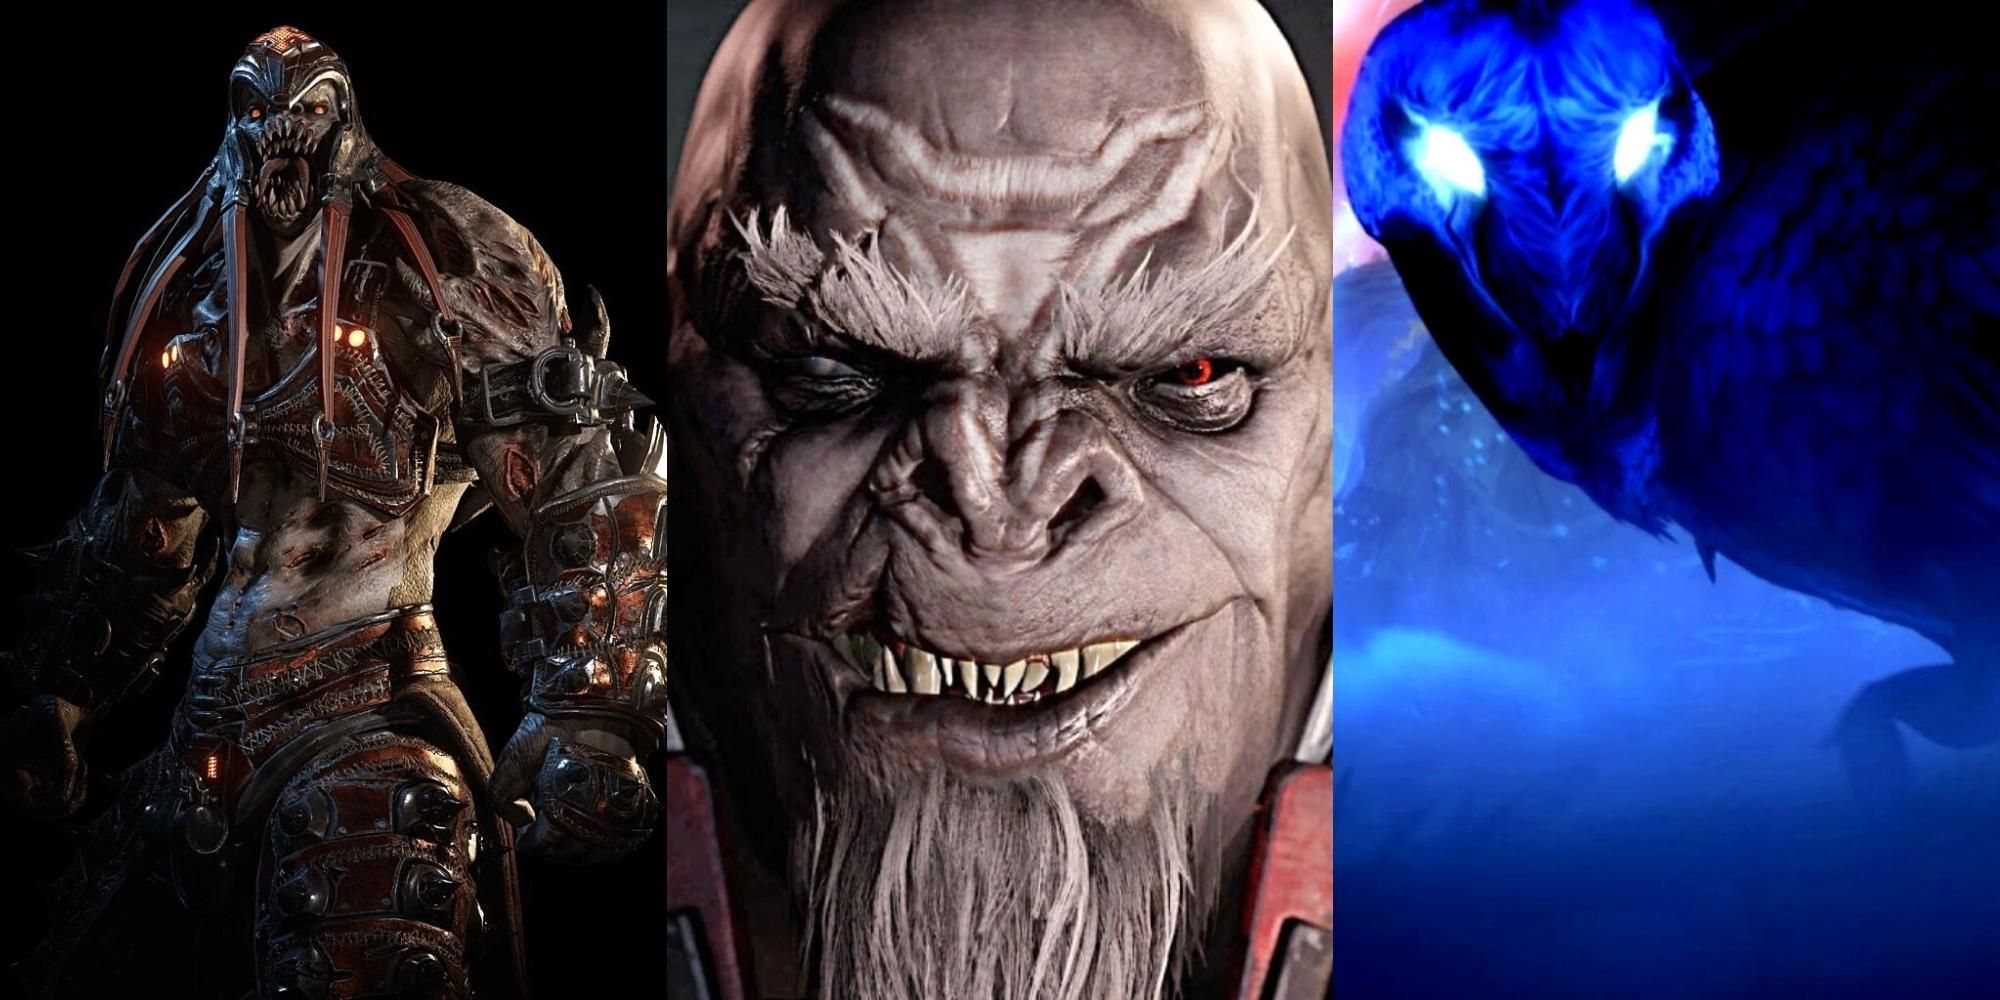 Ketor Skorge in Gears of War 2, War Chief Escharum in Halo Infinite, Kuro in Ori and the Blind Forest